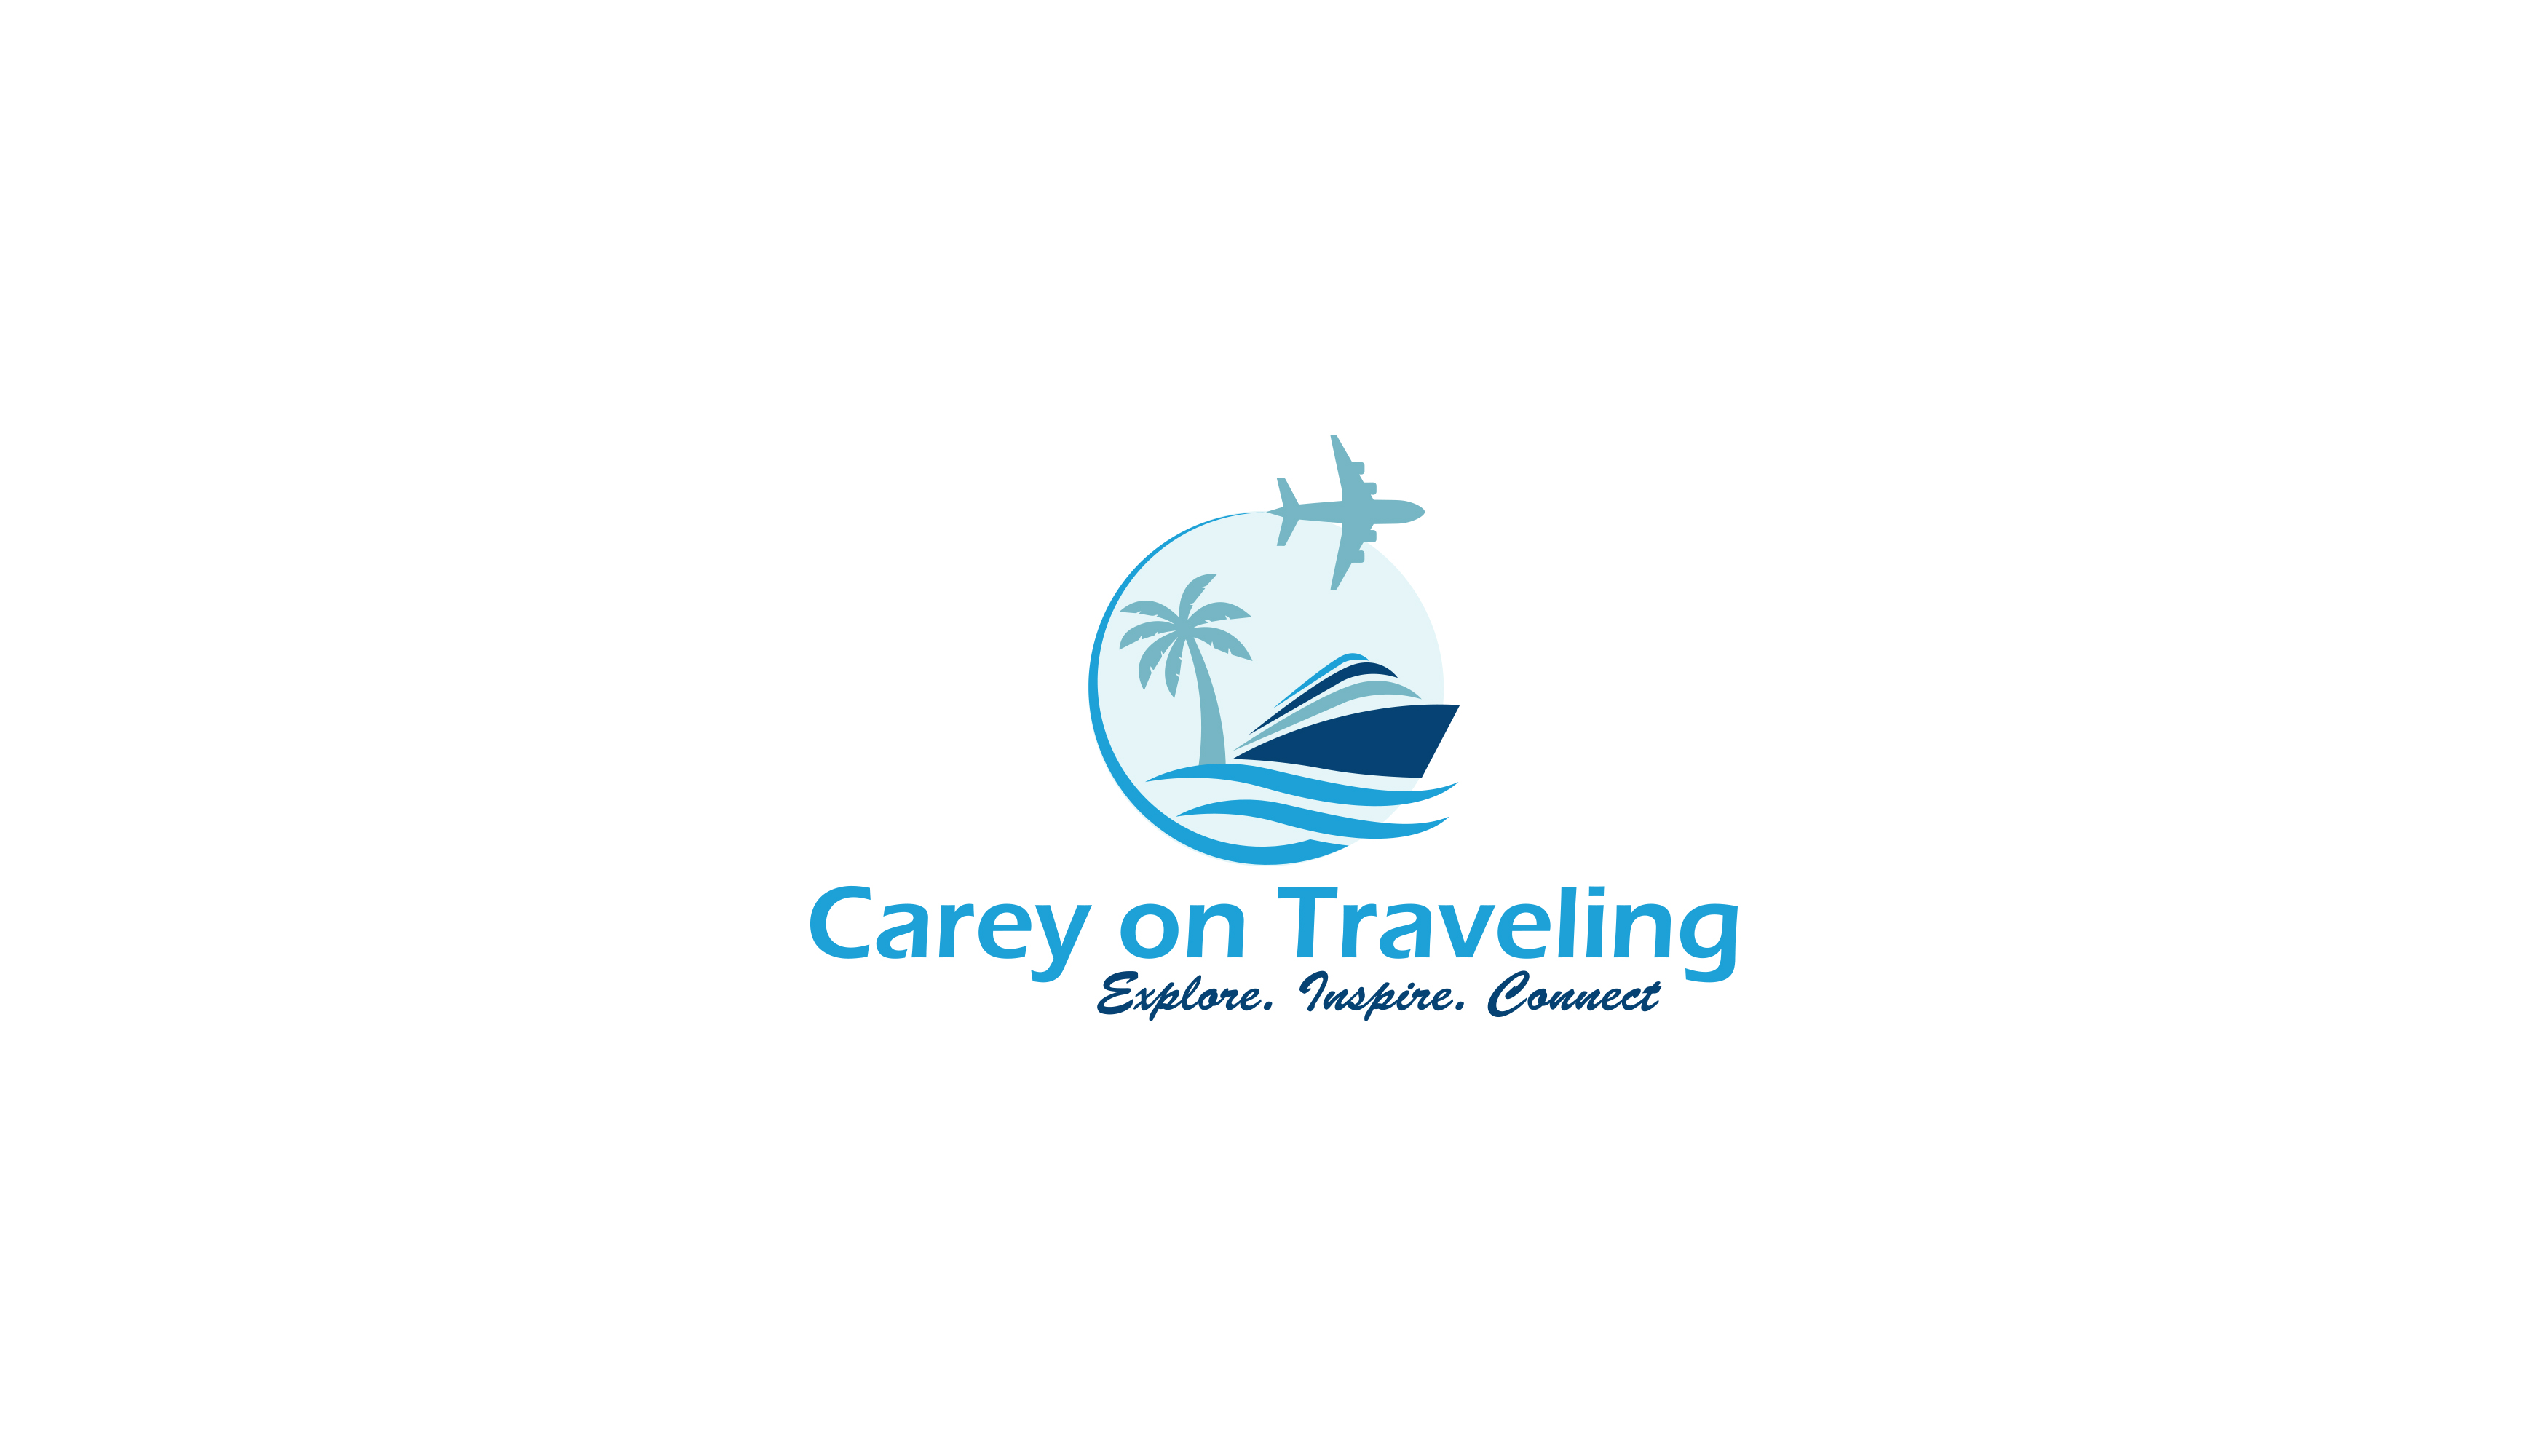 Carey On Traveling Design #1